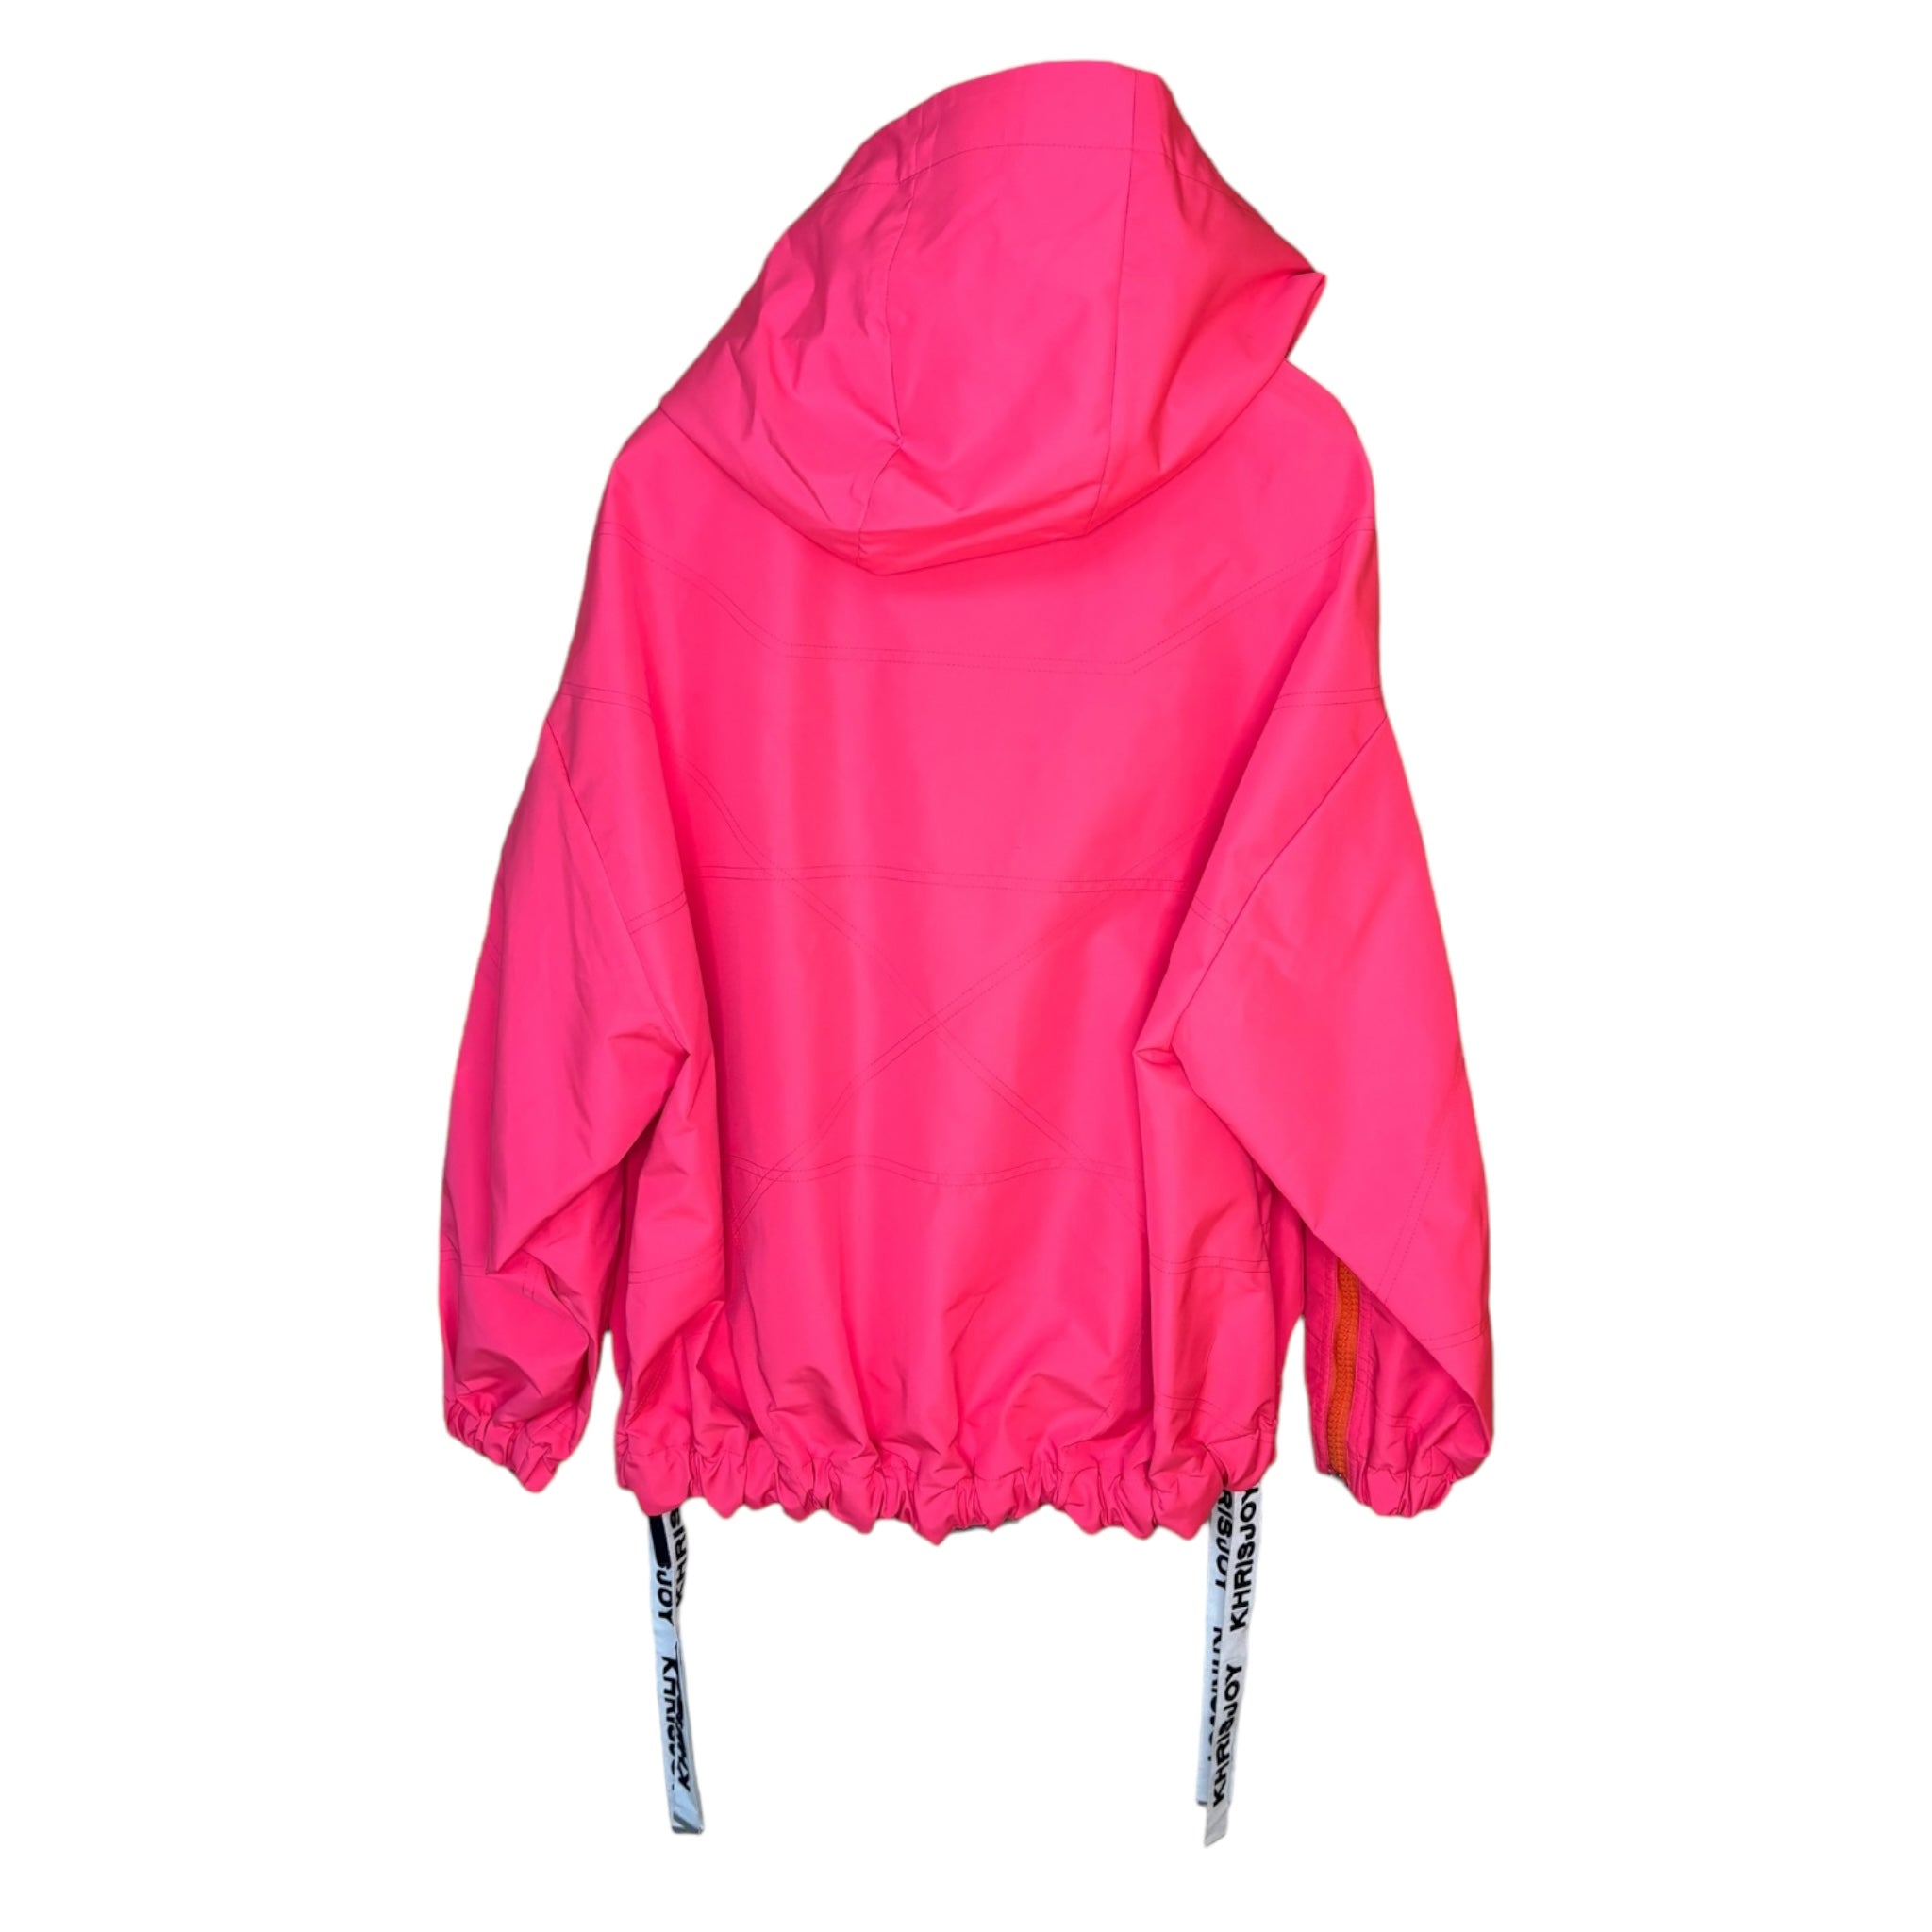 Khrisjoy Nylon large windproof jacket with straps and hood